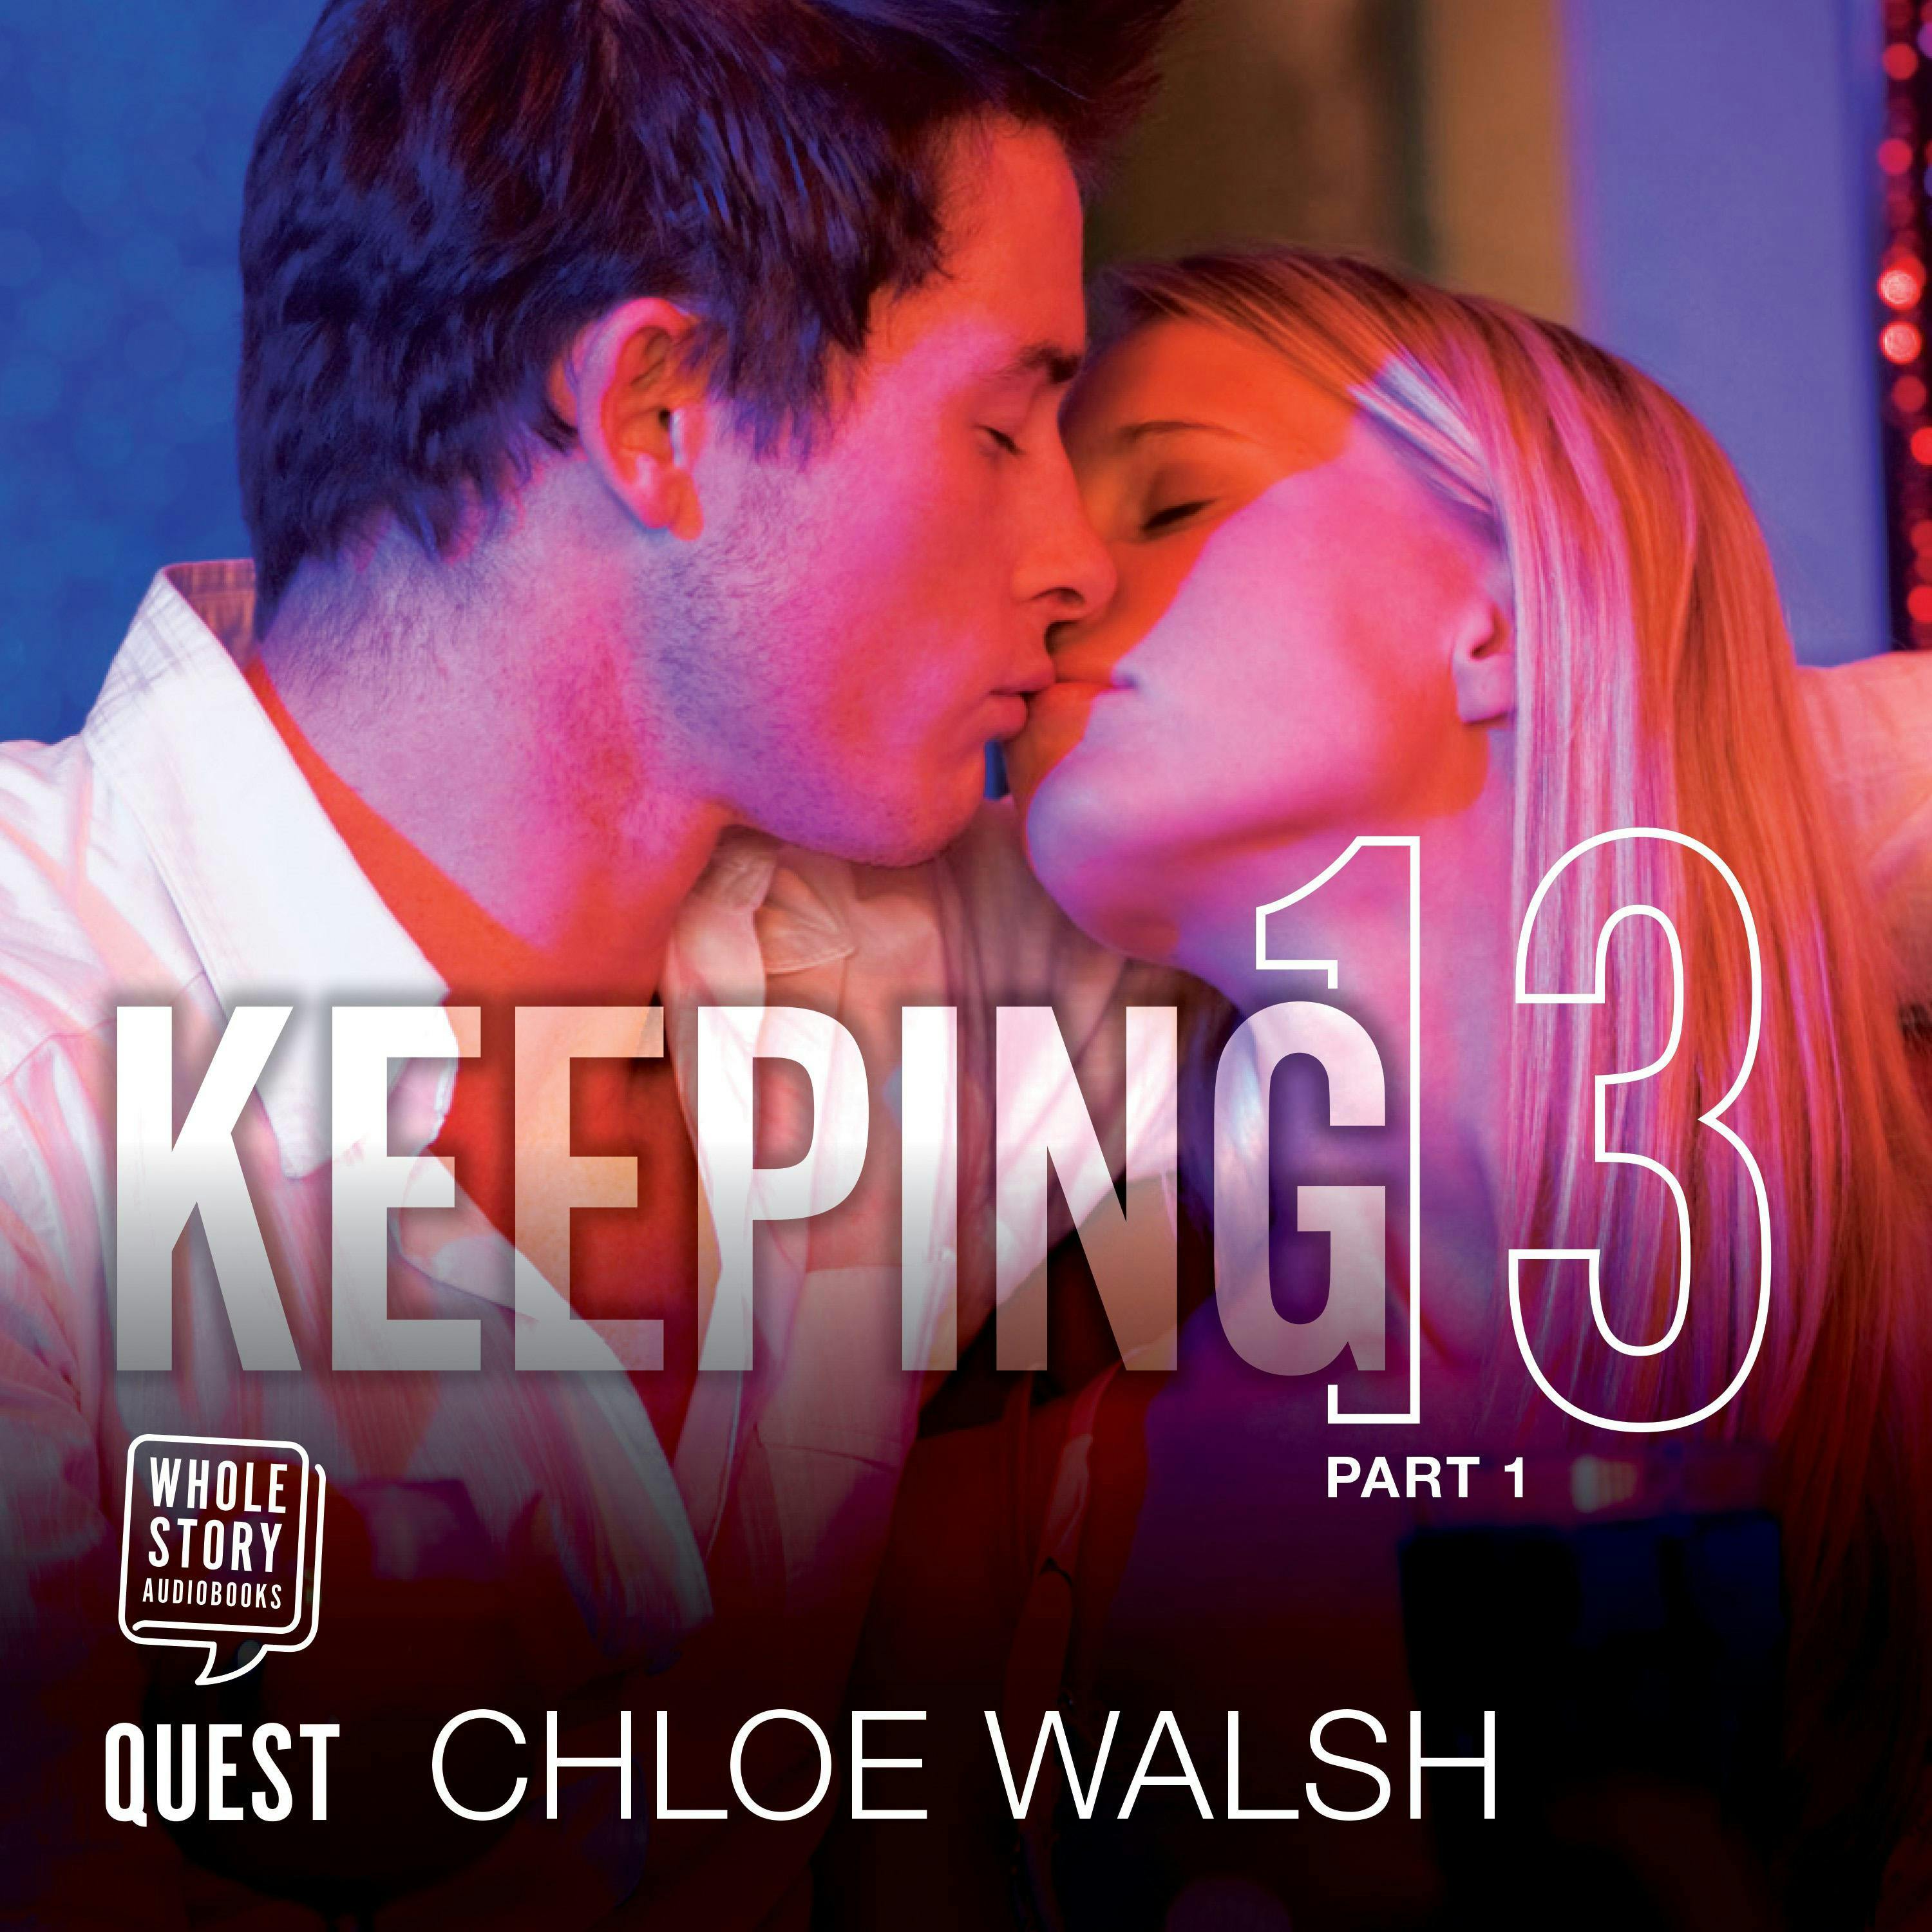 Binding 13: Part One by Chloe Walsh - Audiobook 